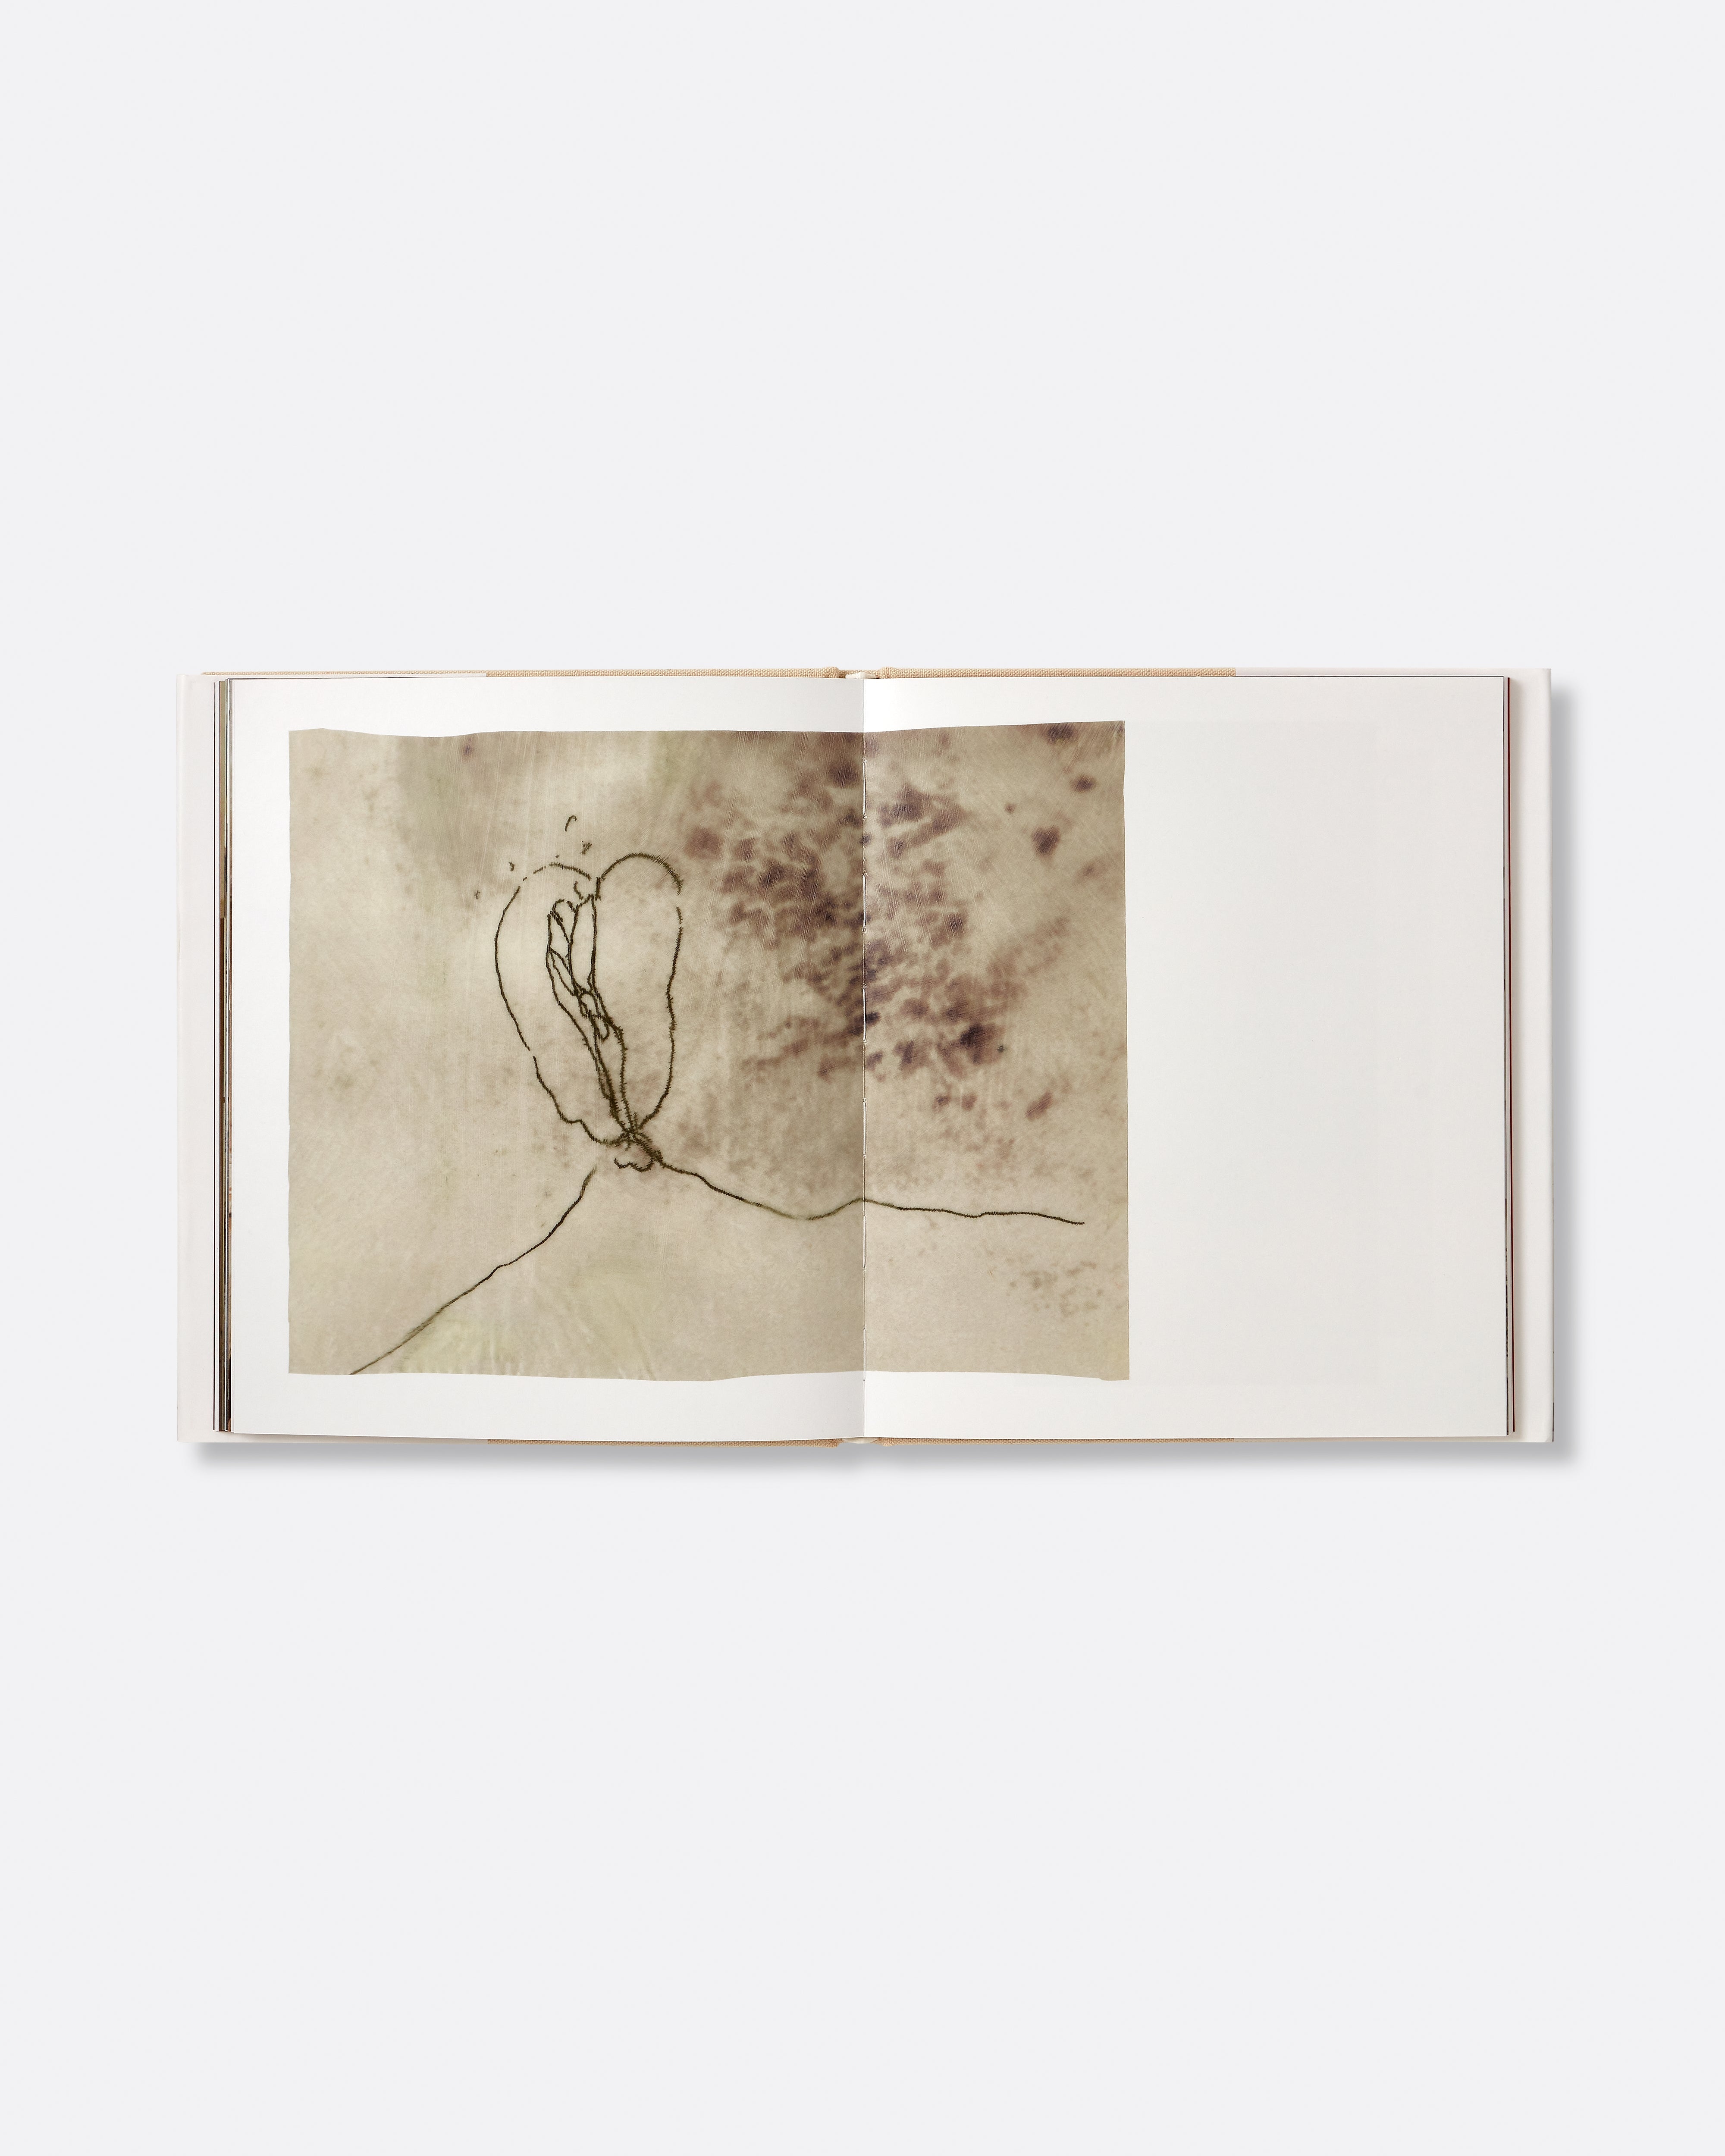 Art Book, Ida Applebroog: MONALISA, Hauser & Wirth